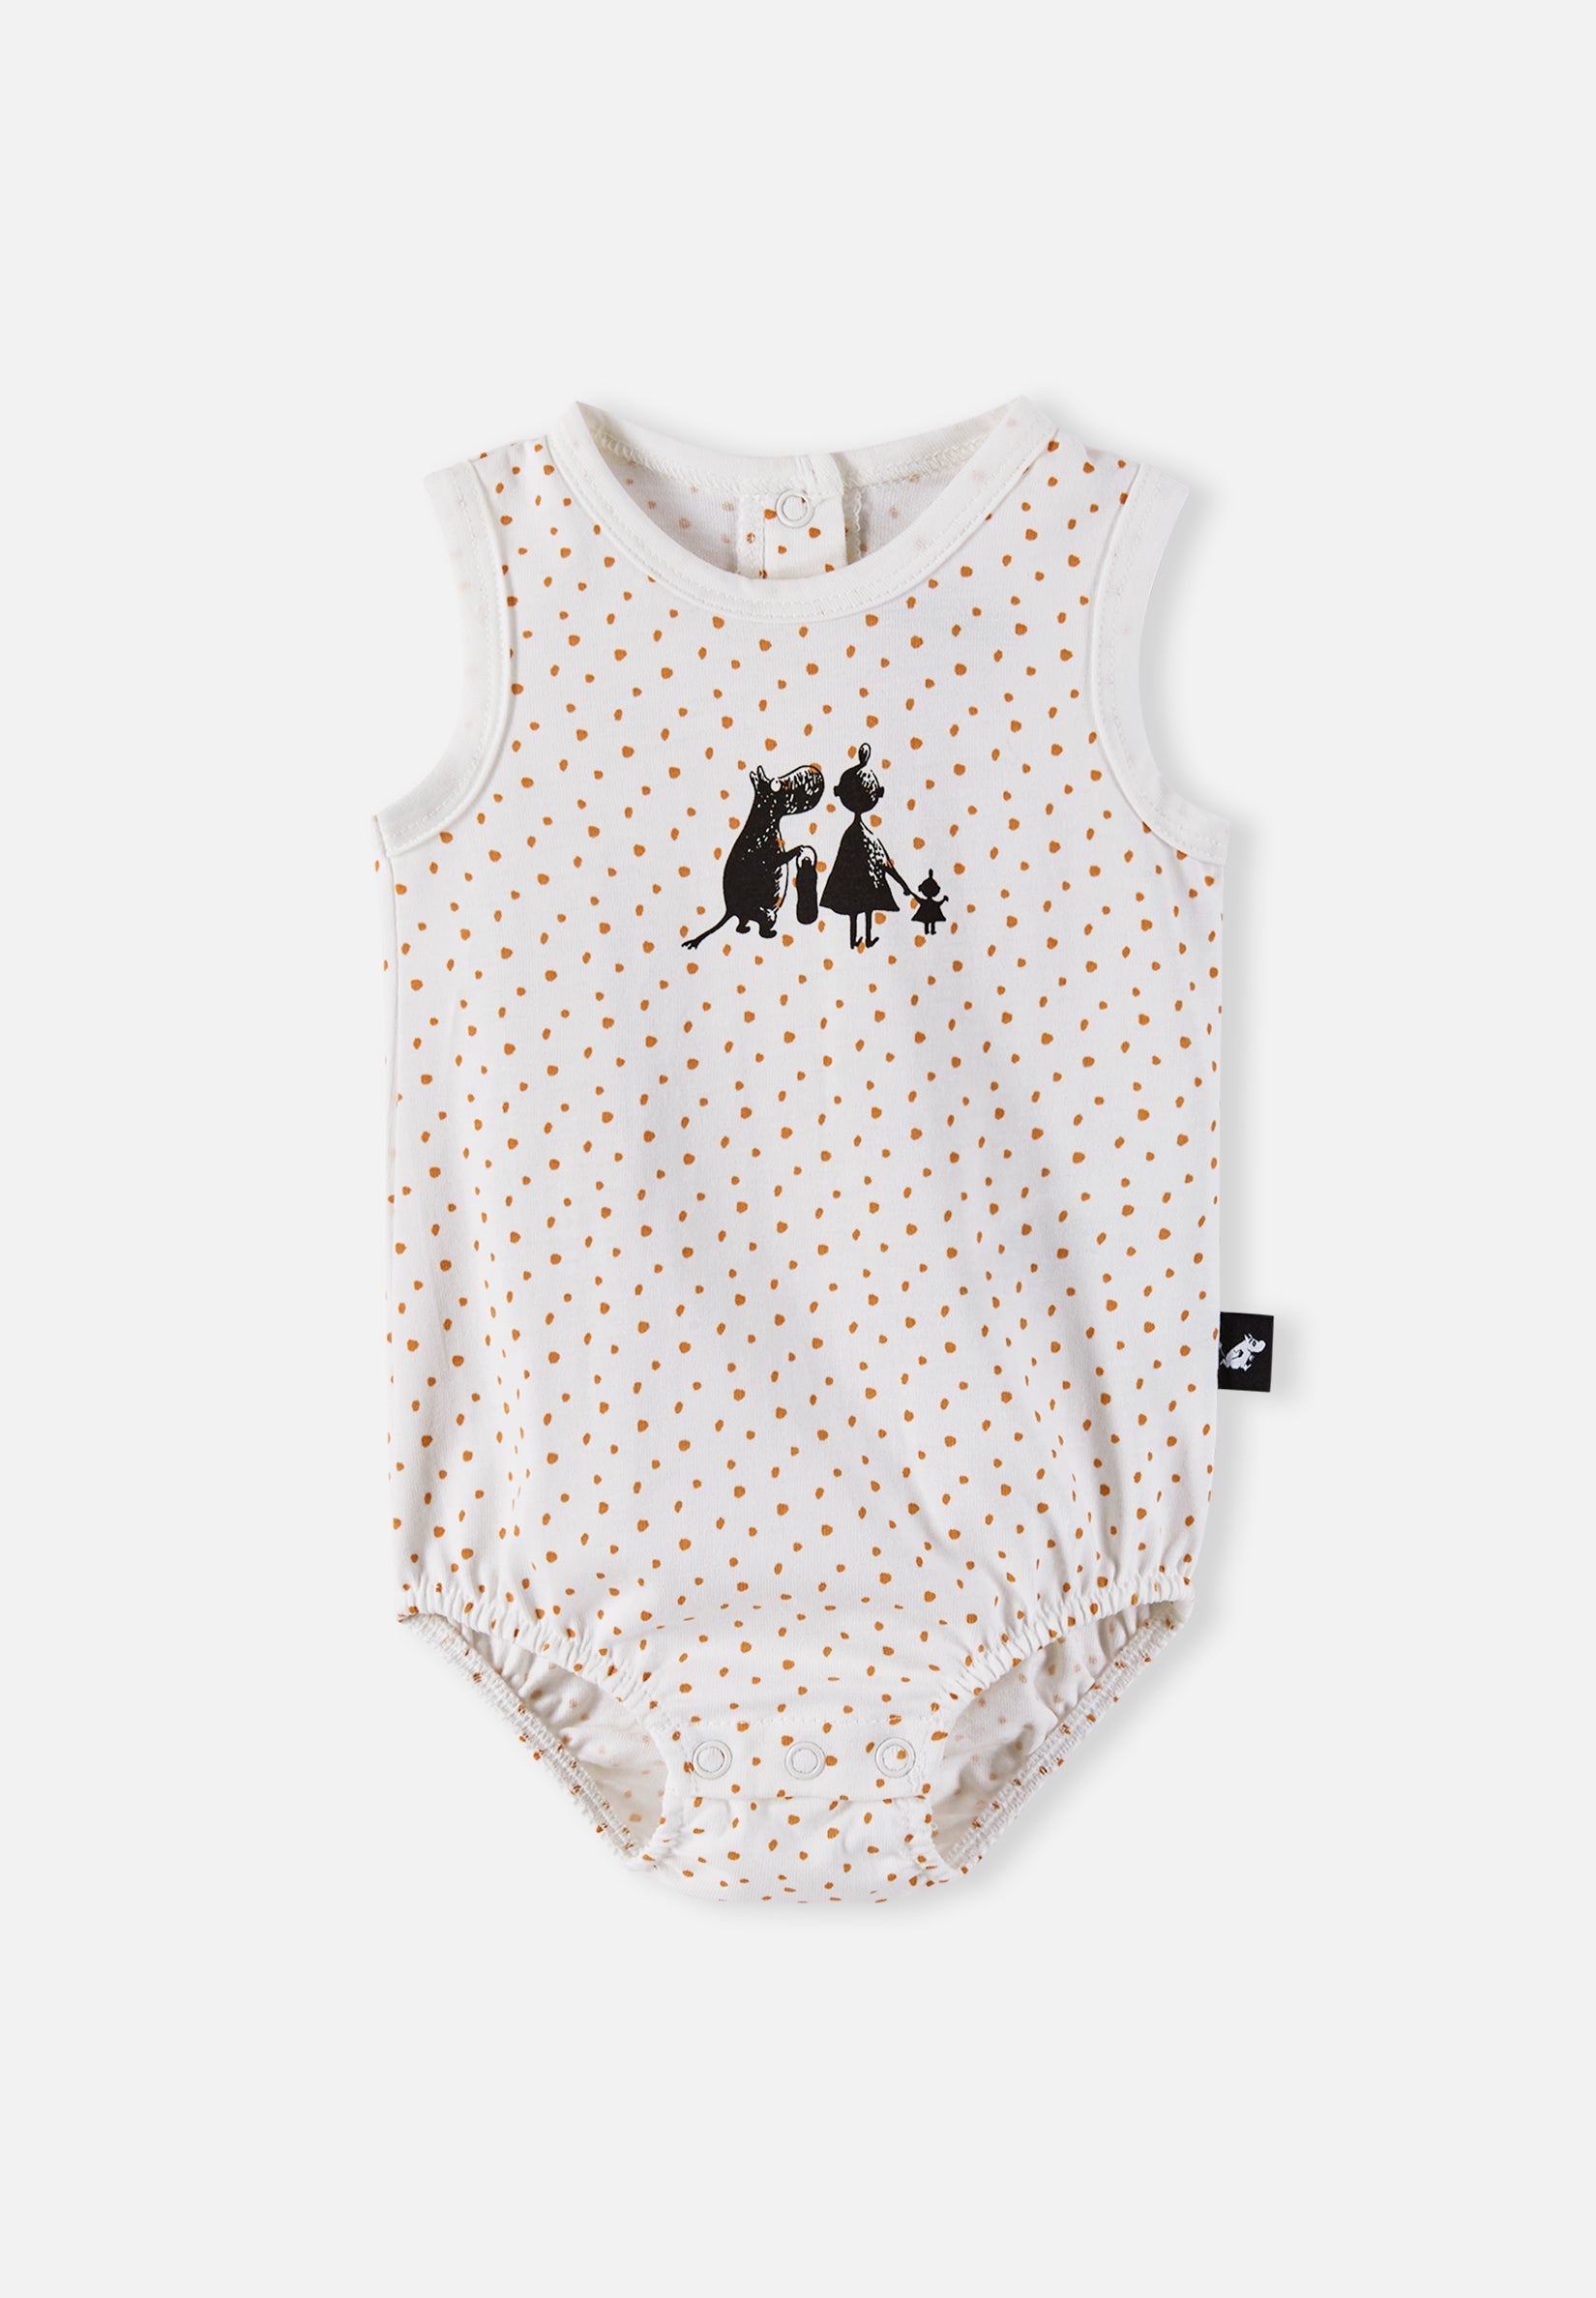 Reima Newborn Baby Clothes Set: Reima's Baby Starter Kit | Reima US